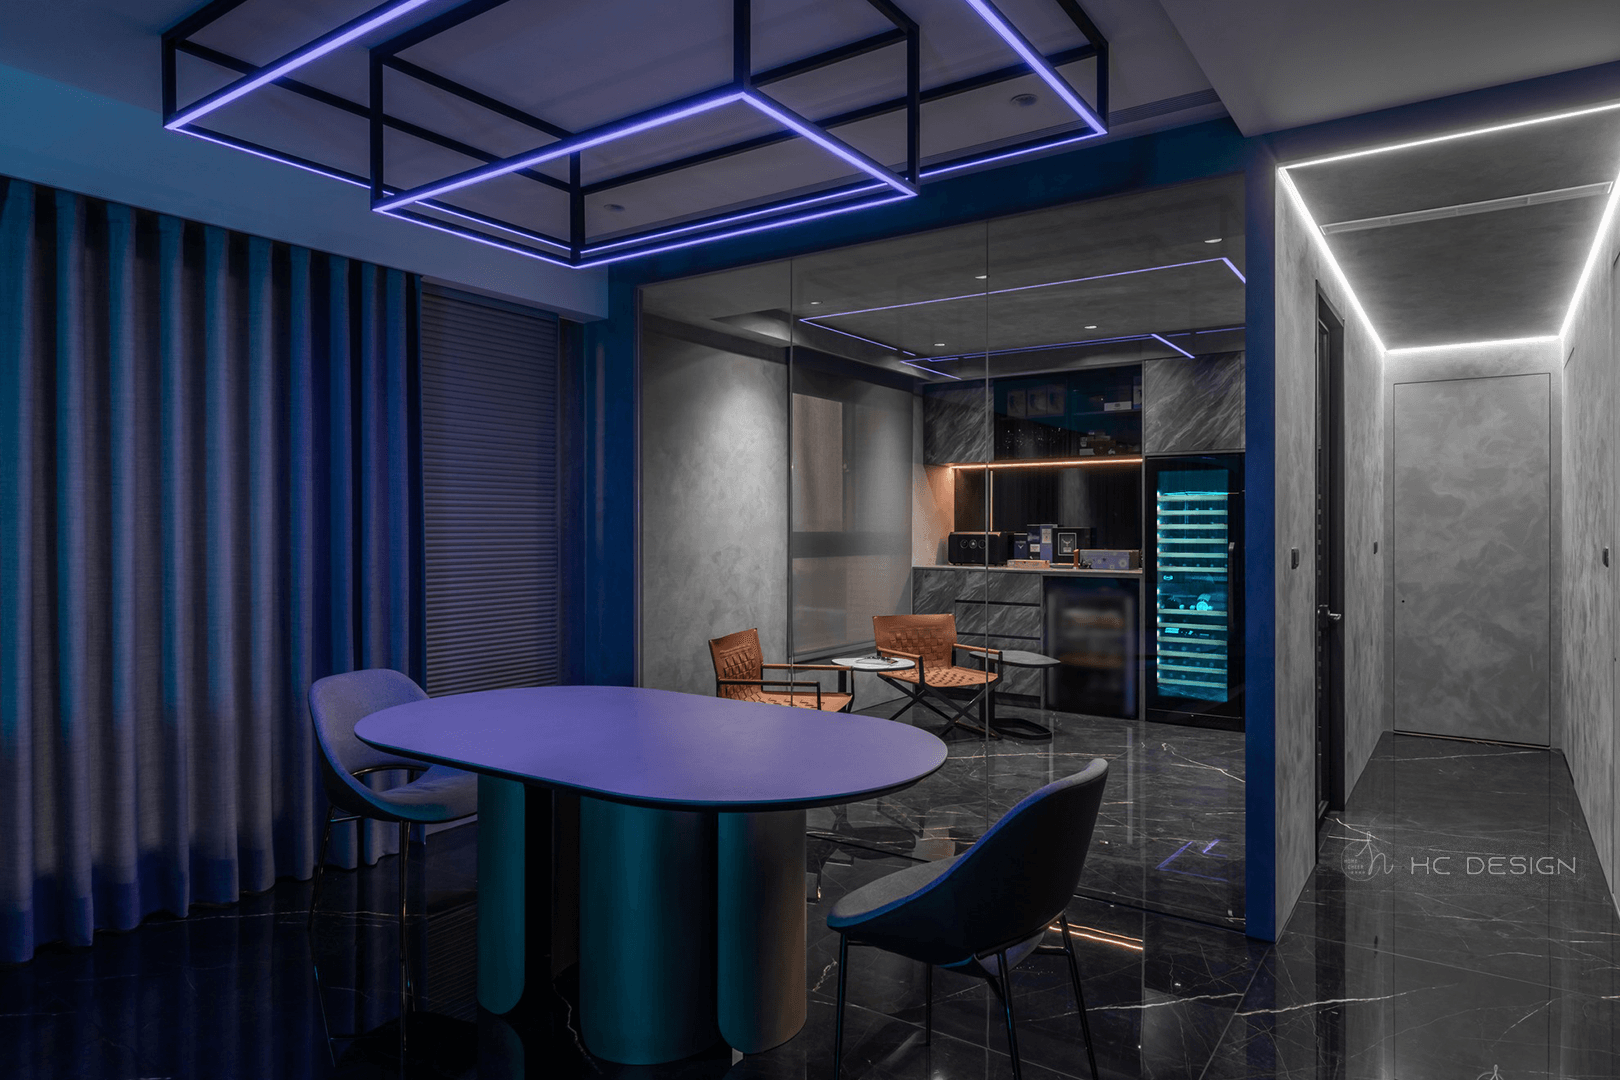 Icy Blue LED Lighting Wine Fridge combines with futuristic interior design